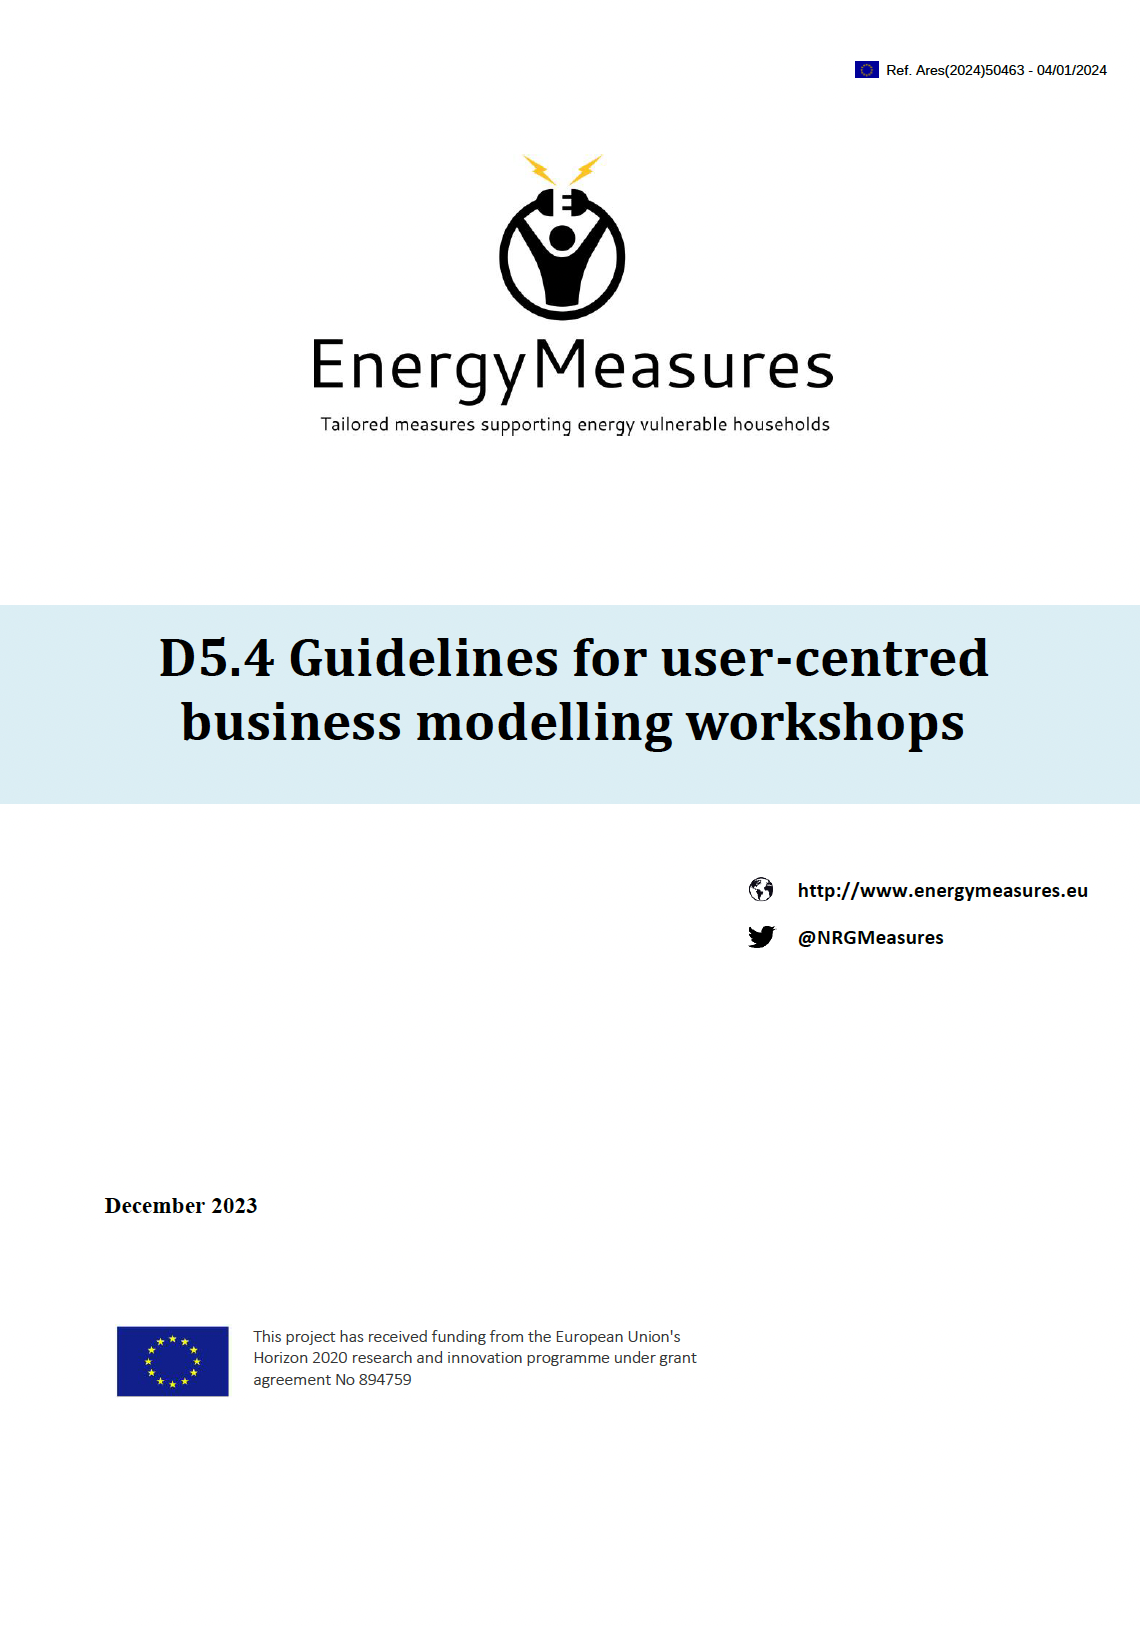 D5.4 Guidelines for user-centred business modelling workshops